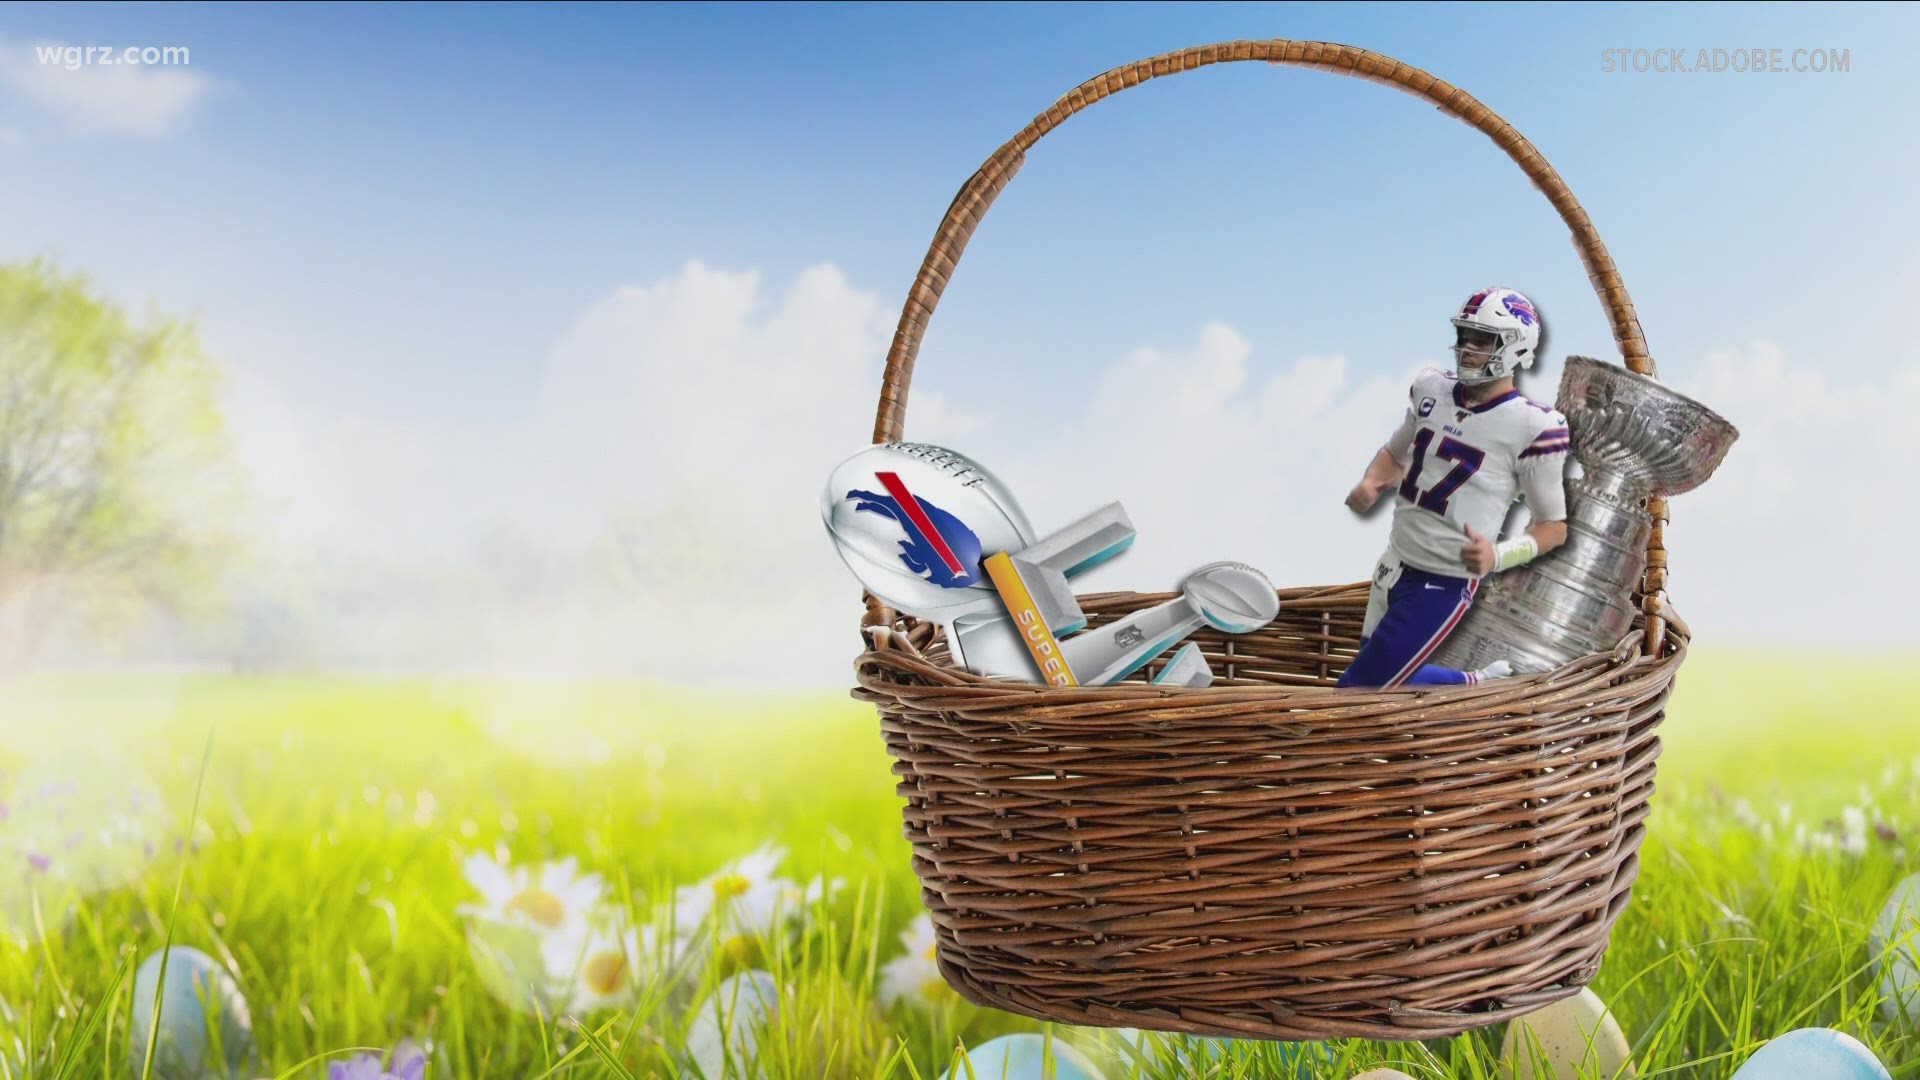 Most Buffalo: 'Most Epic, Most Buffalo Easter basket'